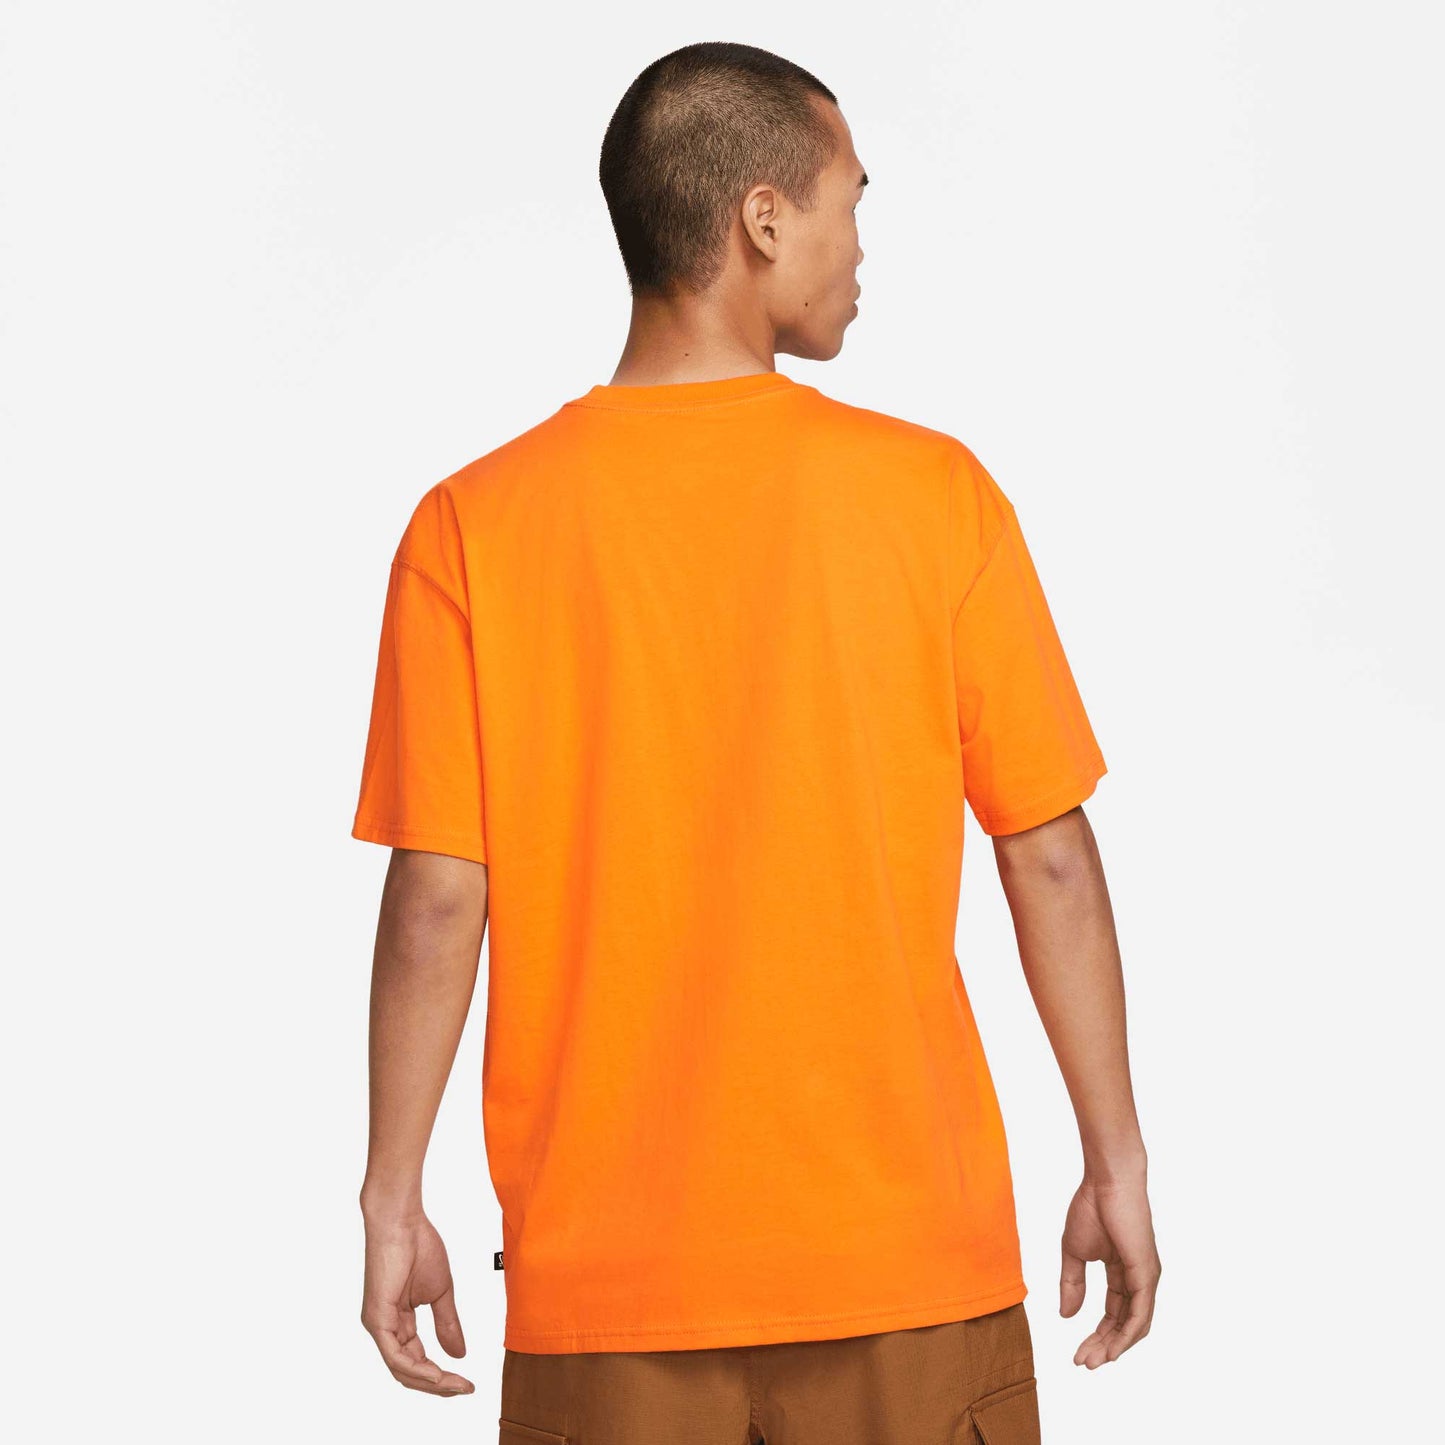 Nike SB Logo Skate T-Shirt, safety orange - Tiki Room Skateboards - 3